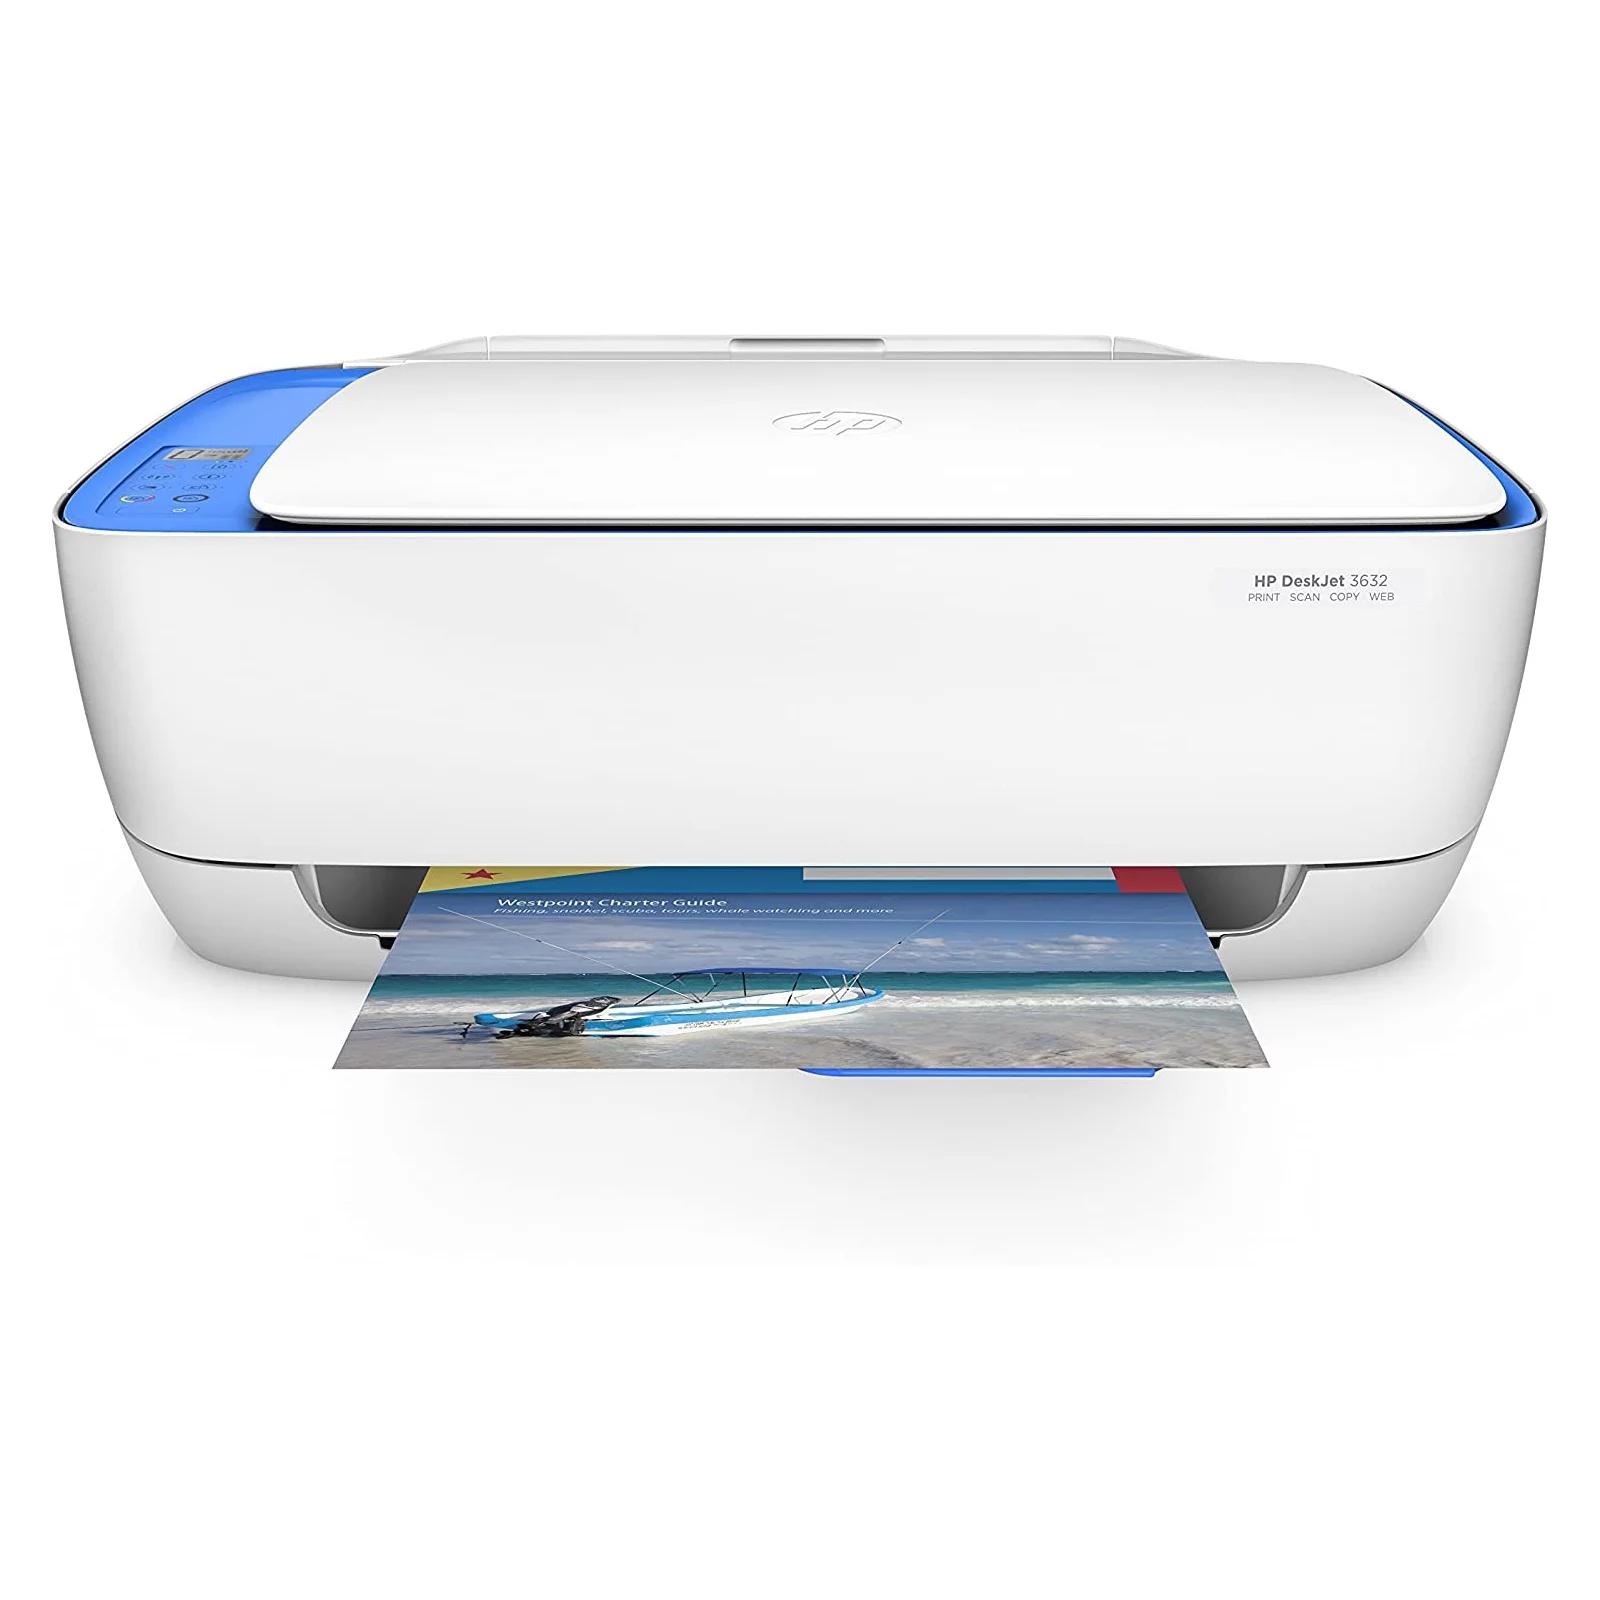 Hp deskjet 3632 printer: specifications, wireless capability, ink cartridges, paper sizes